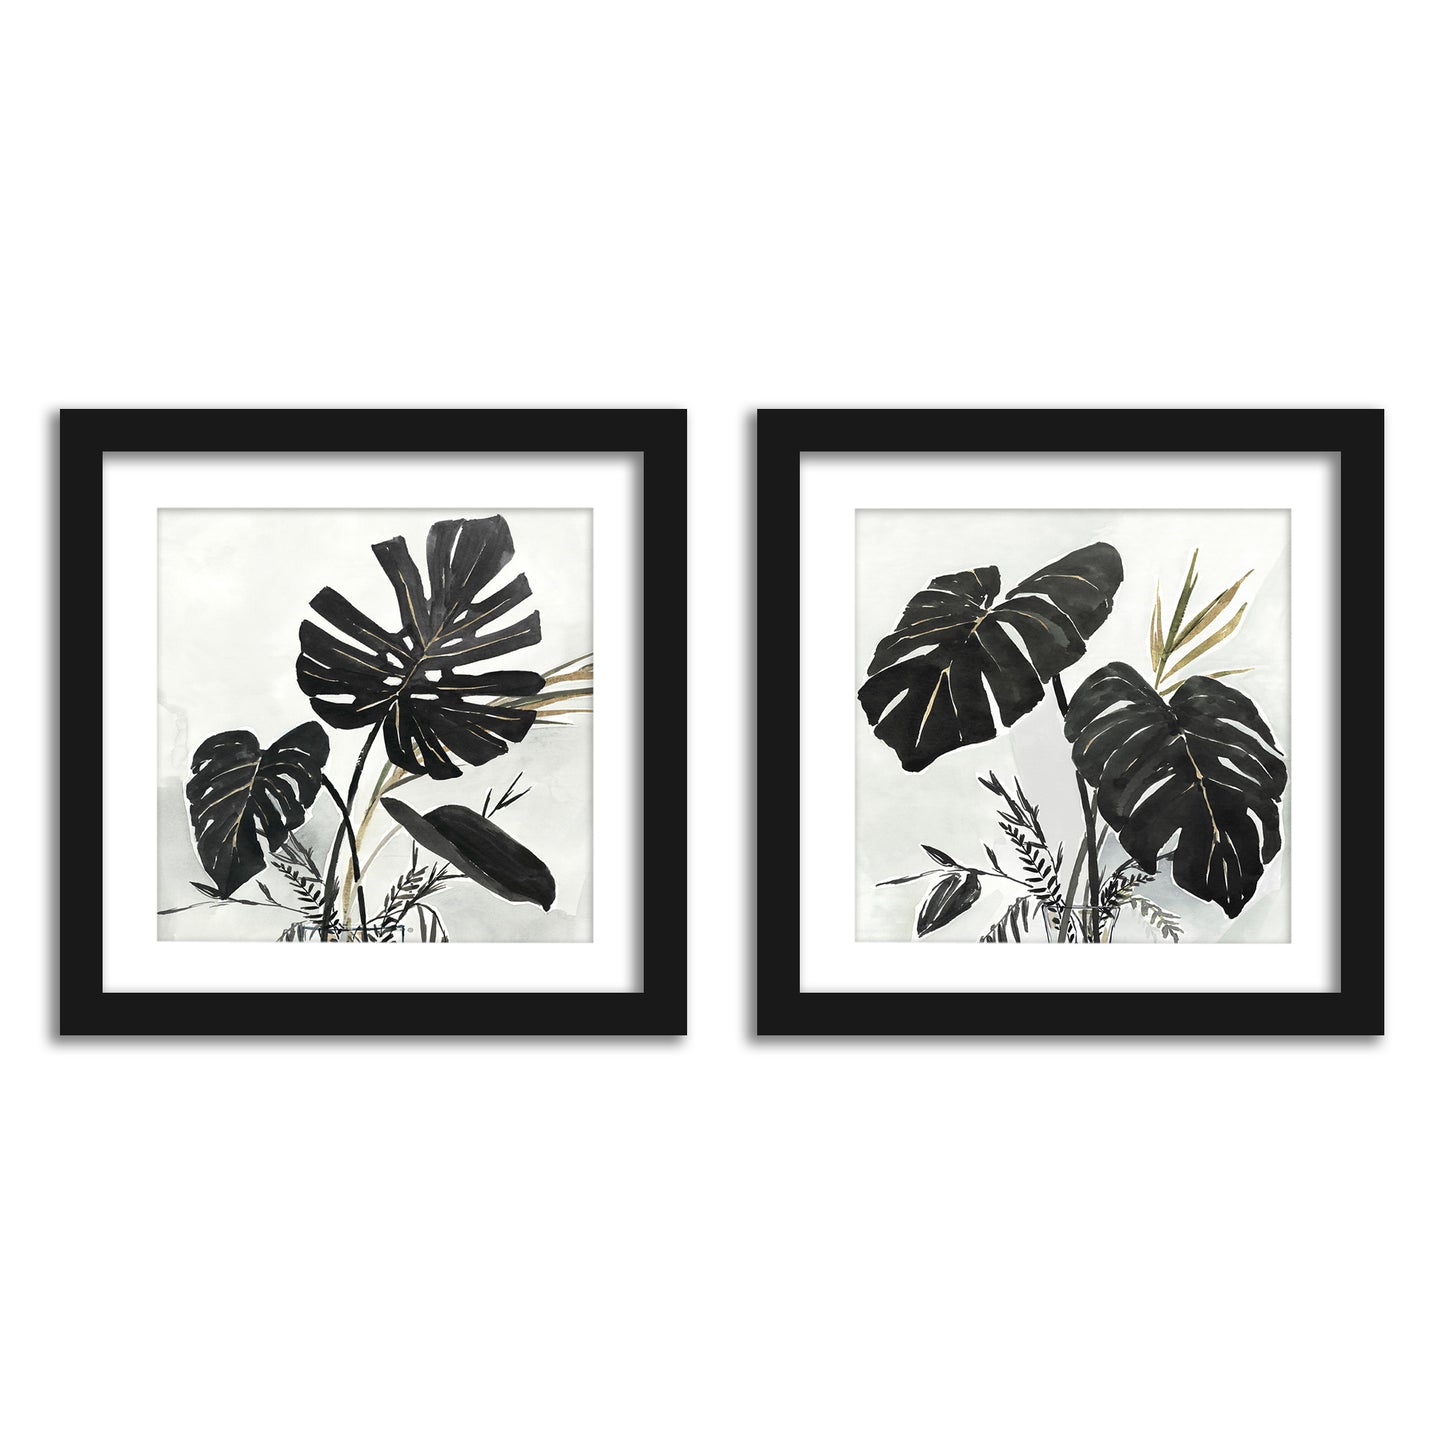  Black Monstera Leaves Bathroom Wall Art - Set of 2 Framed Prints by PI Creative